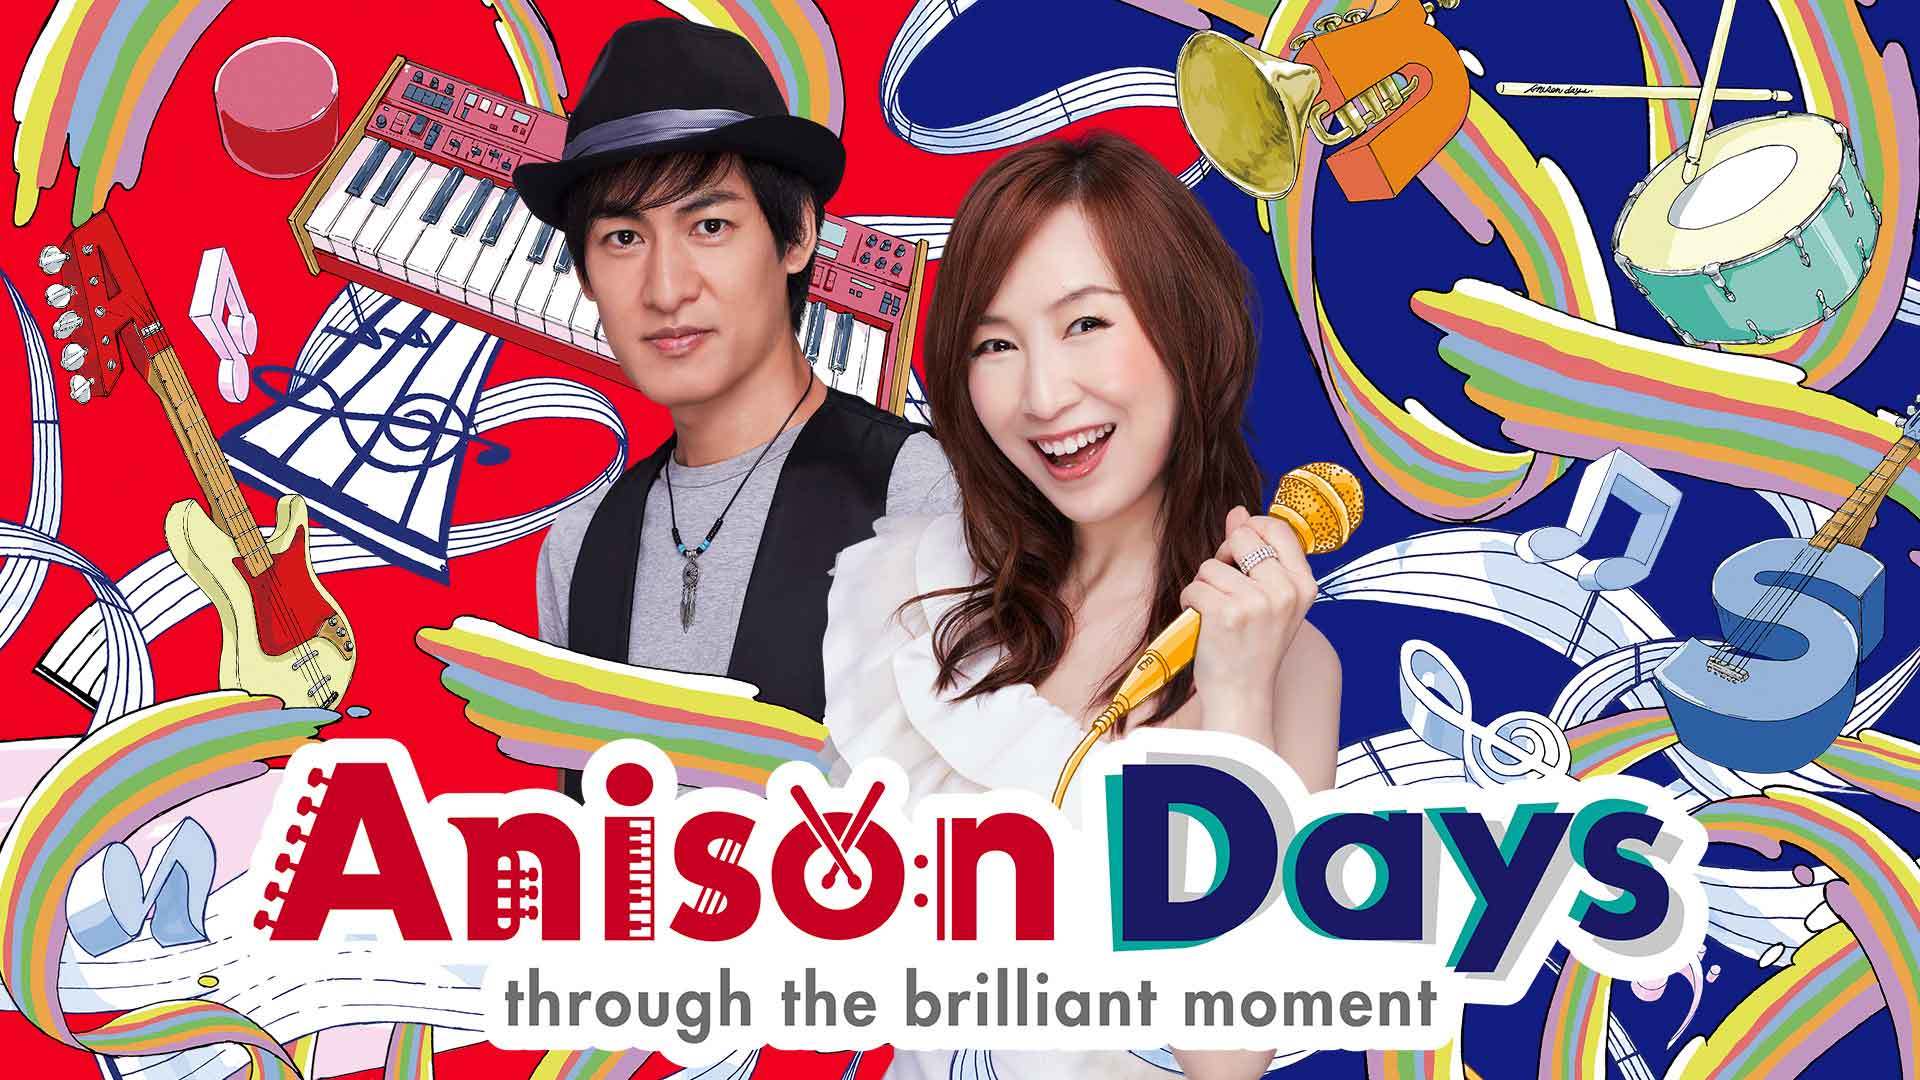 Anison Days